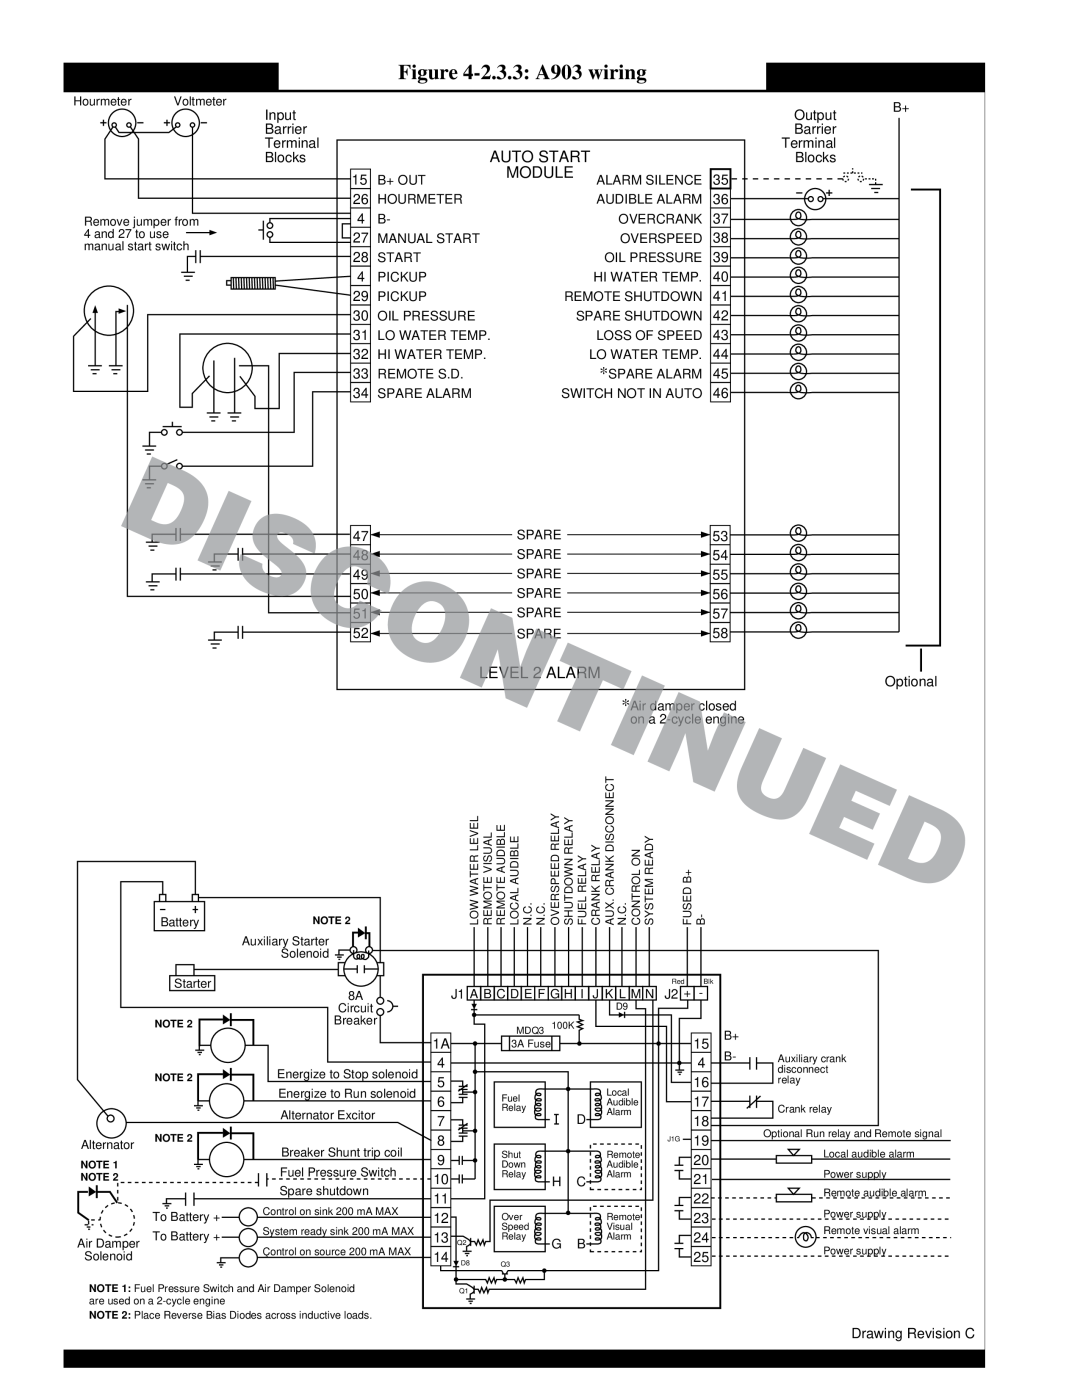 Murphy Series A900 2.3.3 A903 wiring, Input, Output Barrier Terminal Blocks, Optional, Drawing Revision C 